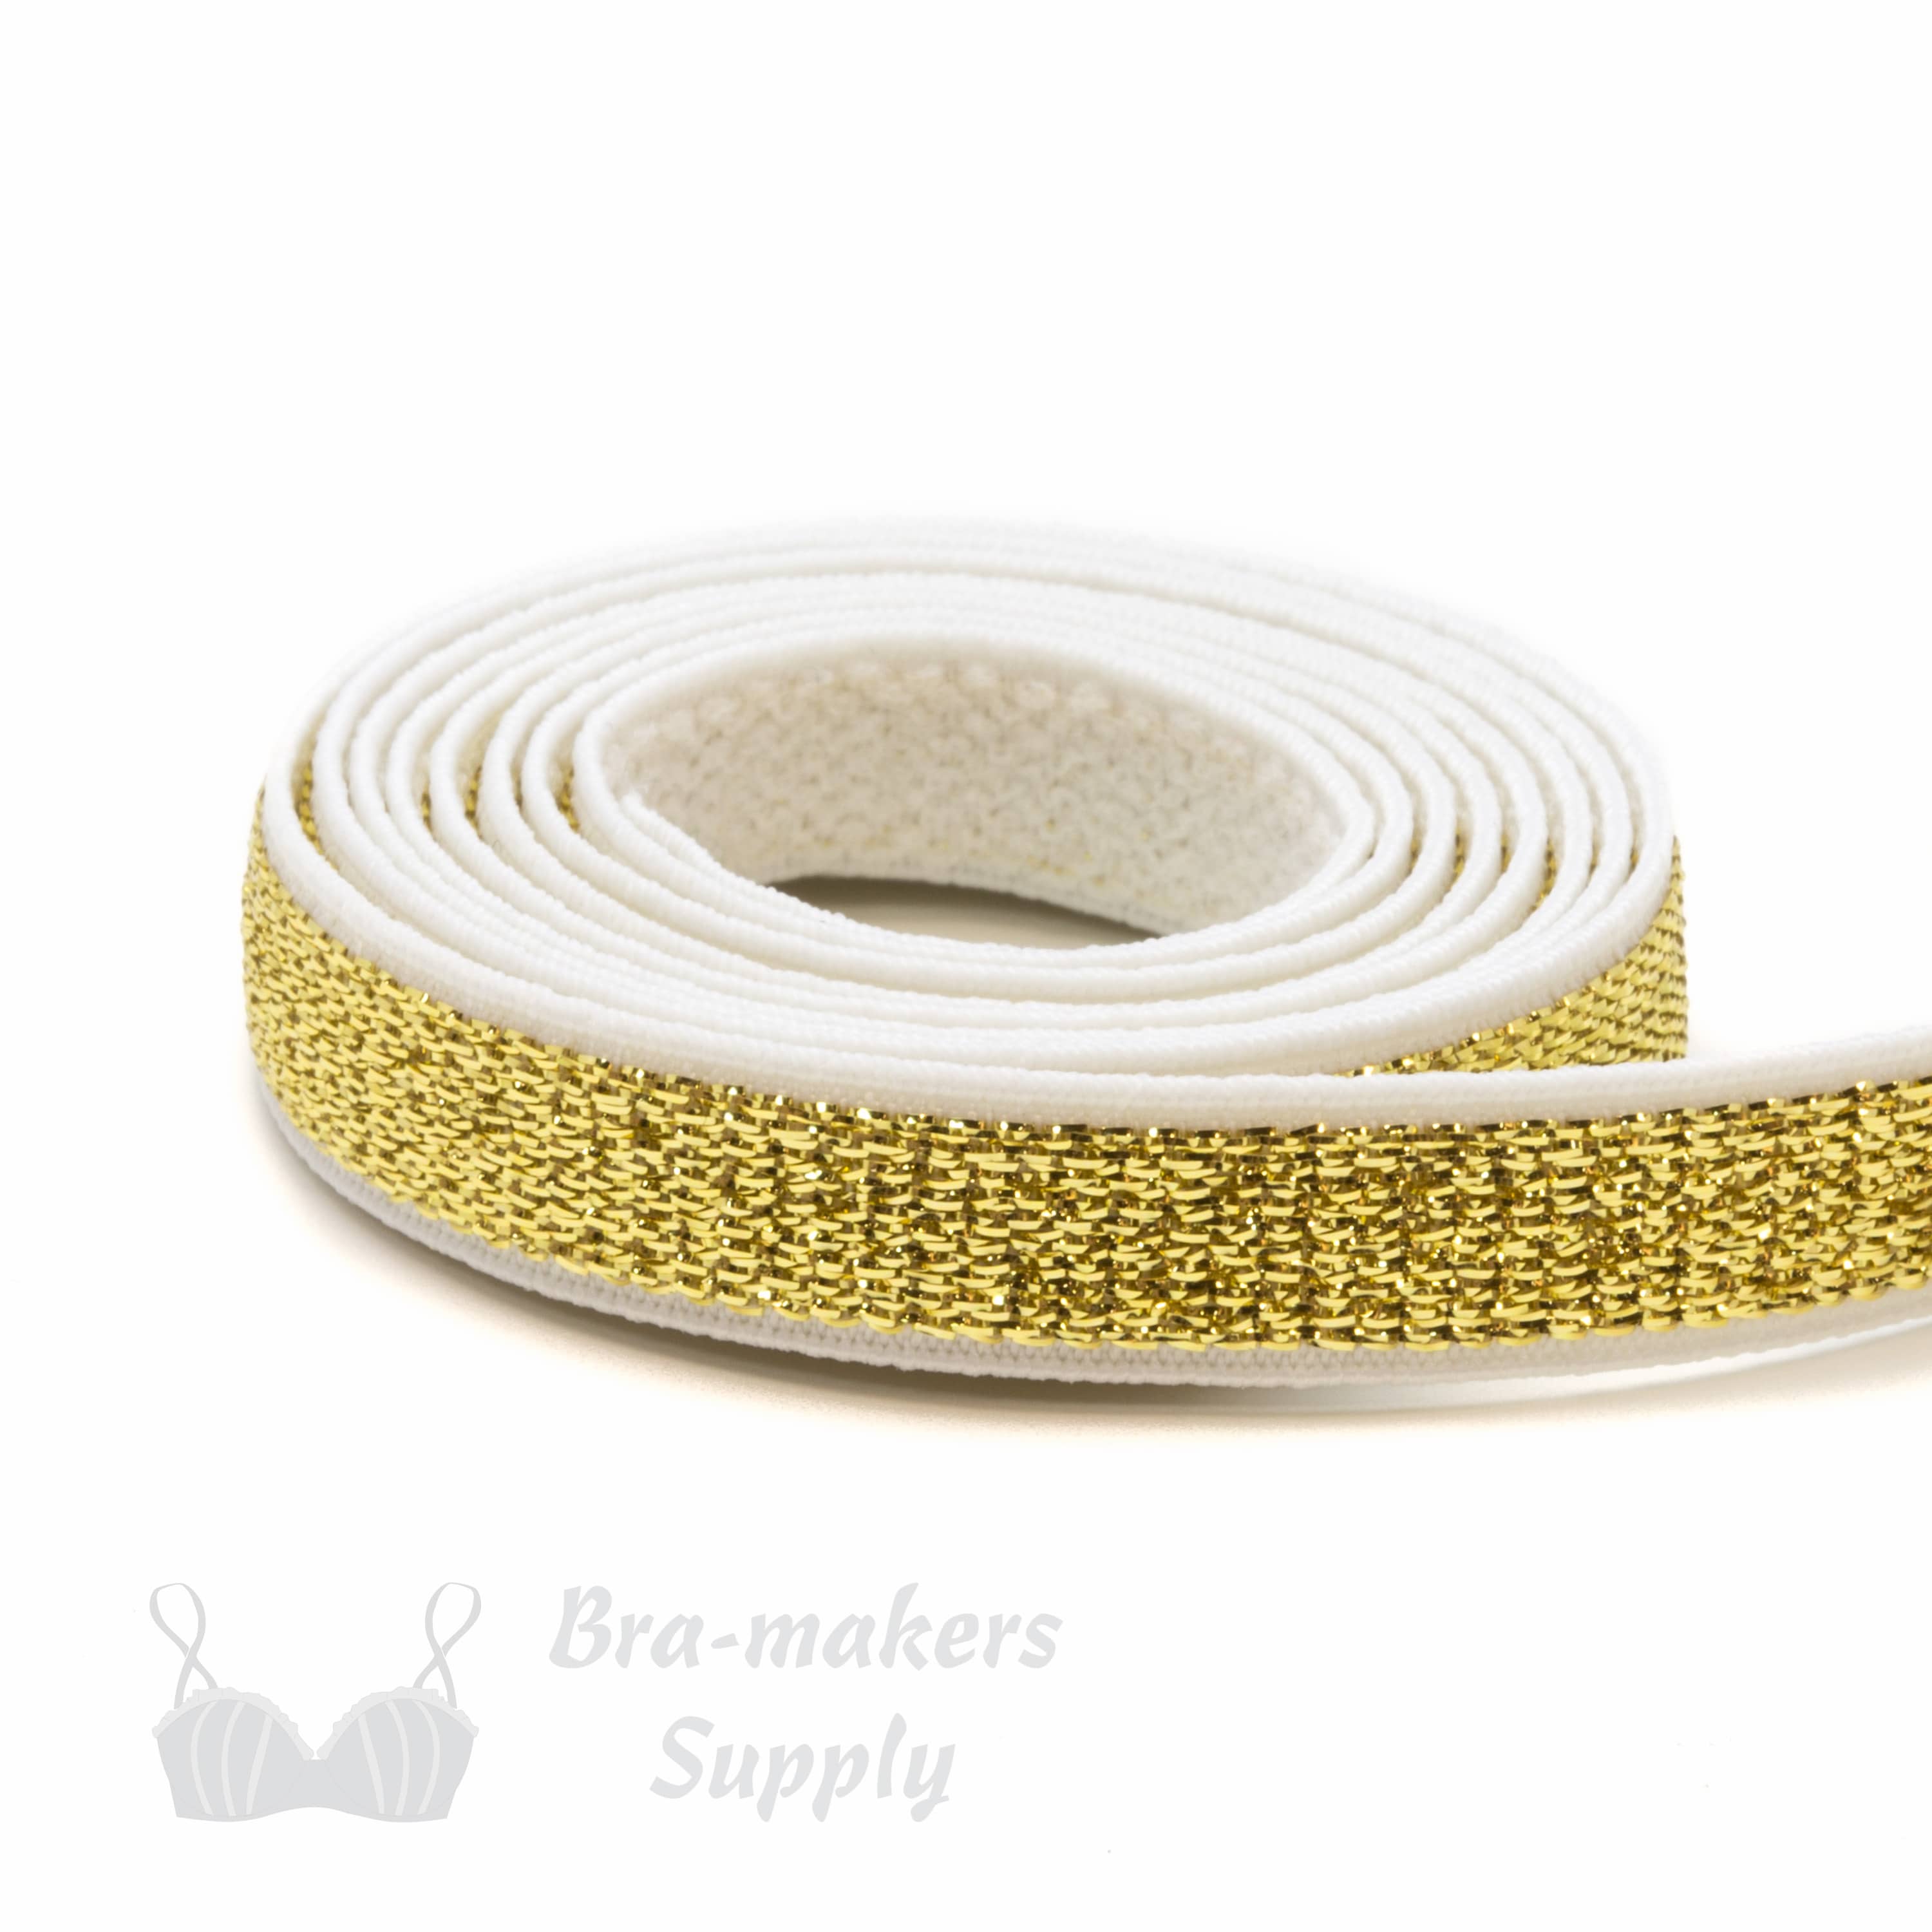 bra strap bracelet, bra strap bracelet Suppliers and Manufacturers at